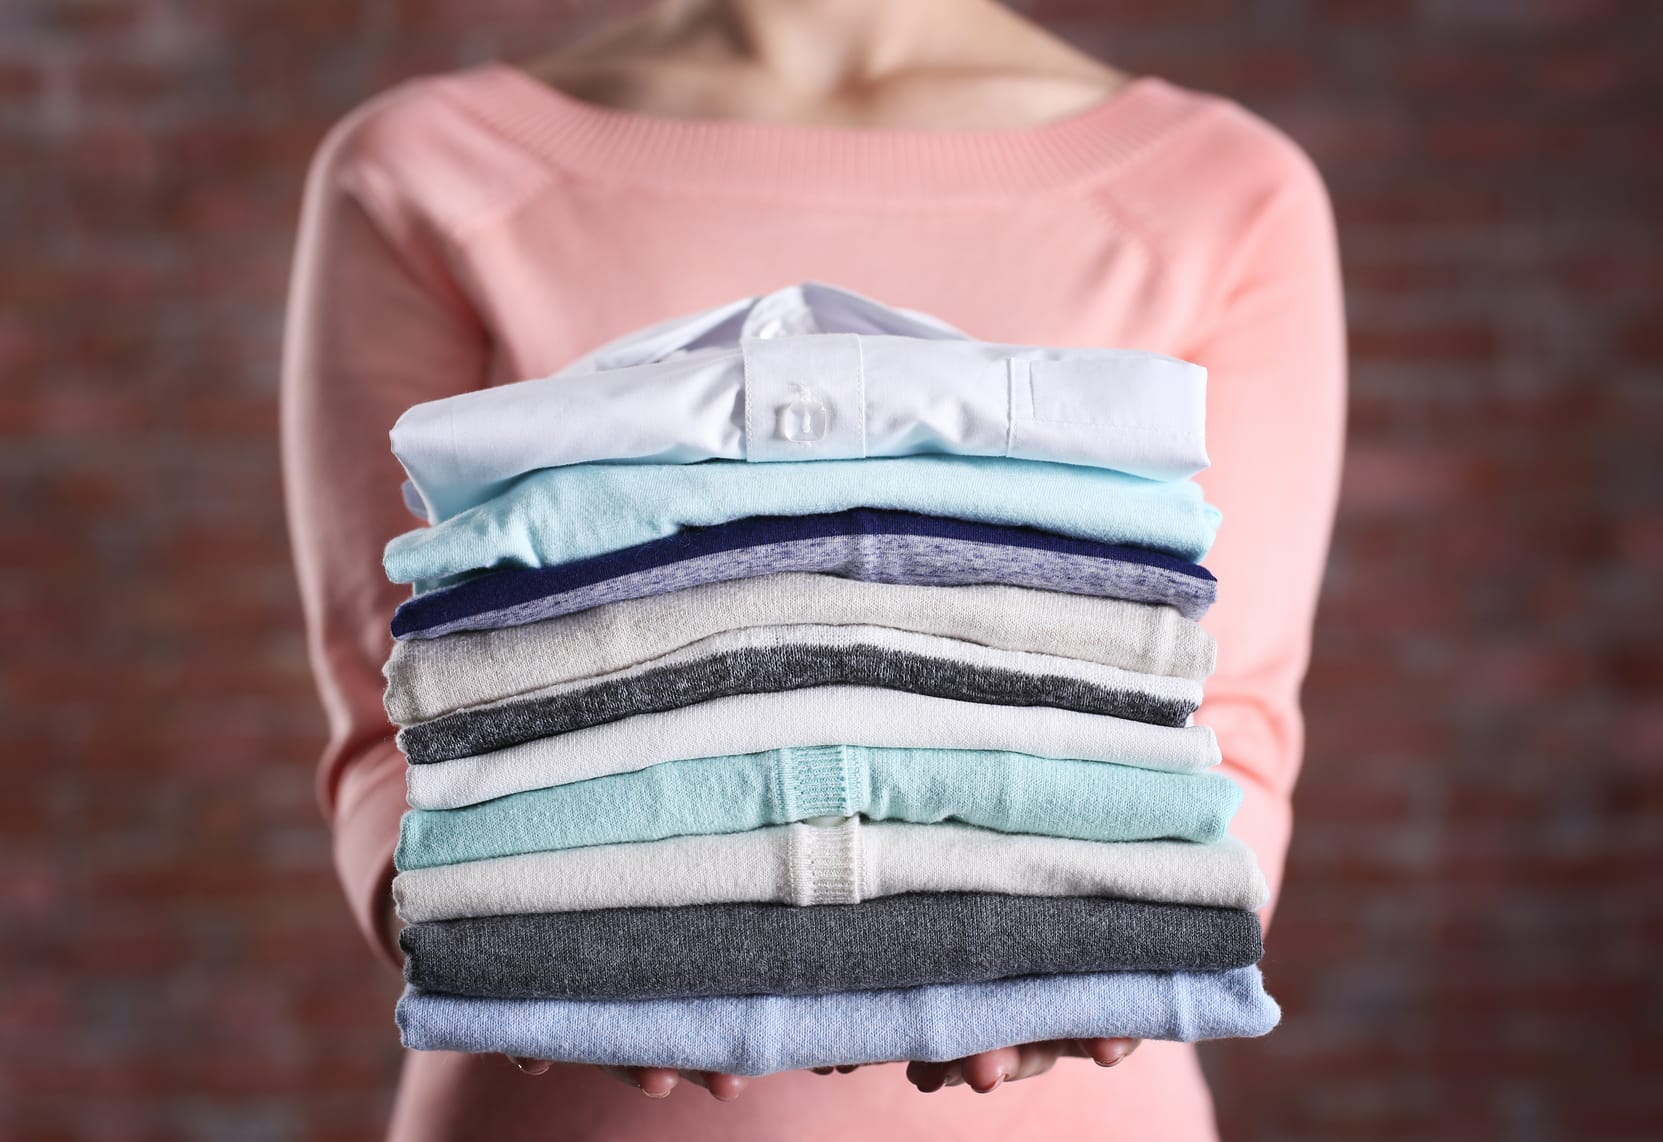 Hemden bügeln – So geht’s richtig